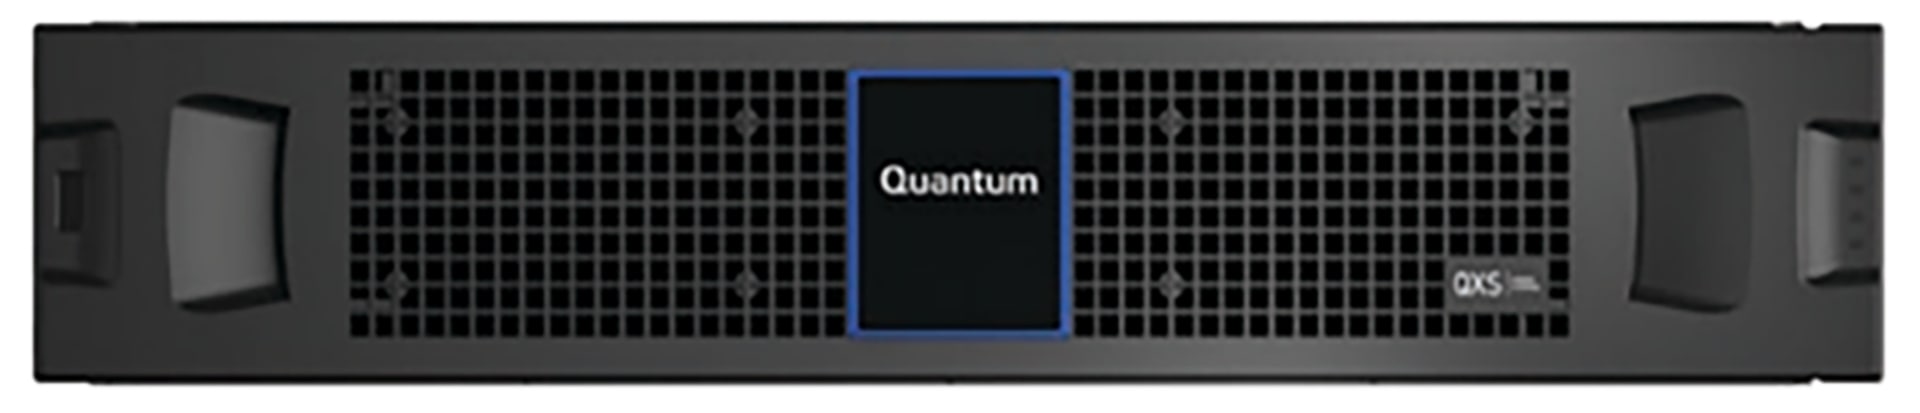 Quantum QXS-584 12G RAID Node Storage Array Appliance